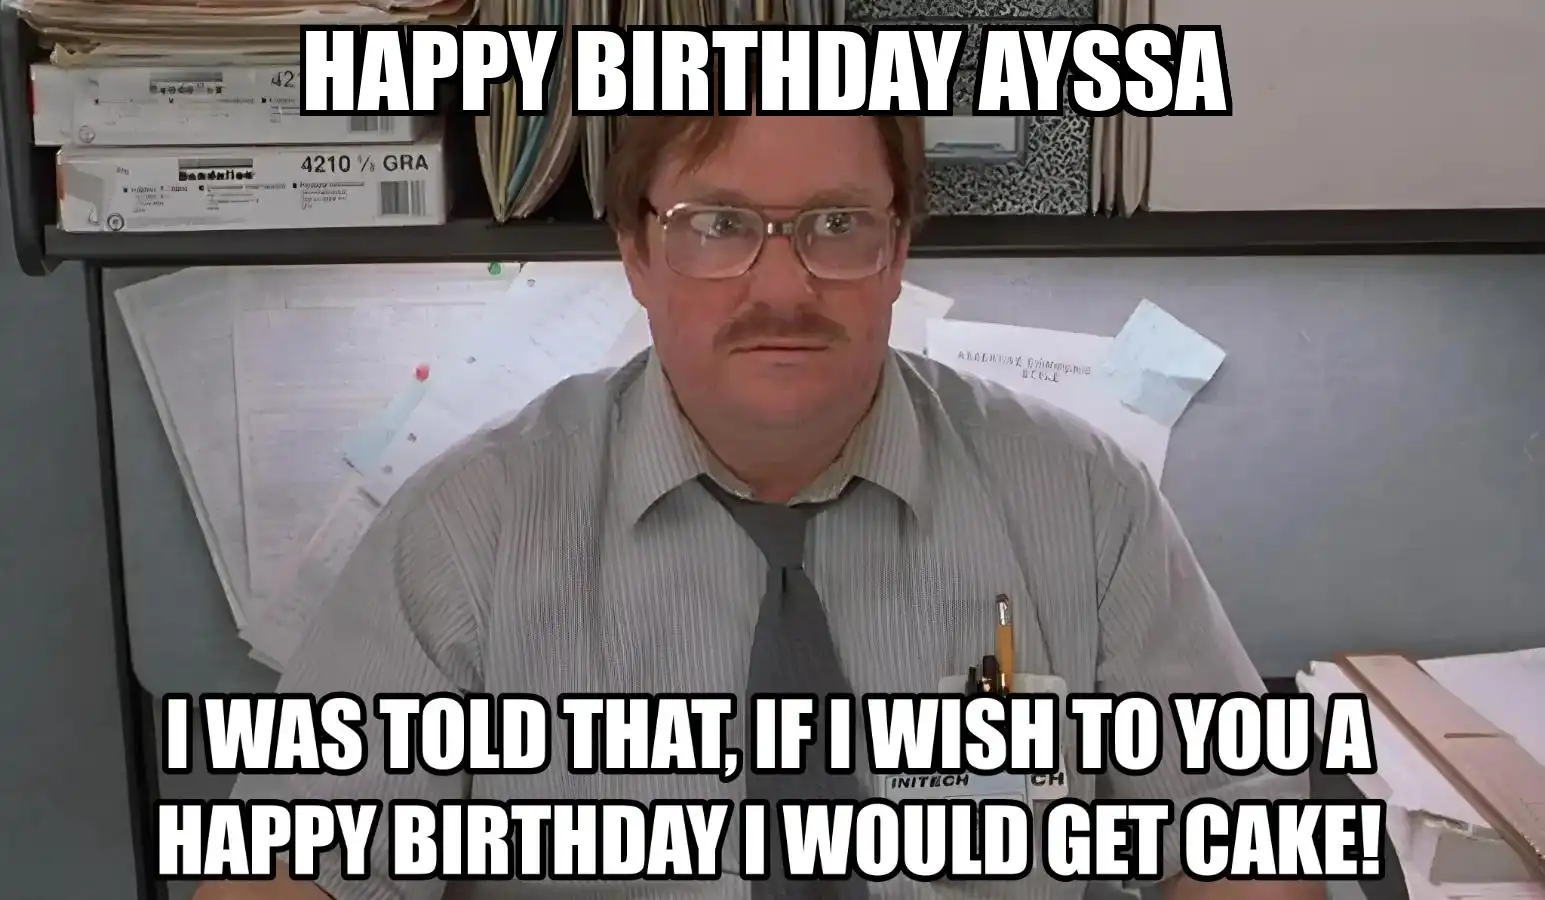 Happy Birthday Ayssa I Would Get A Cake Meme